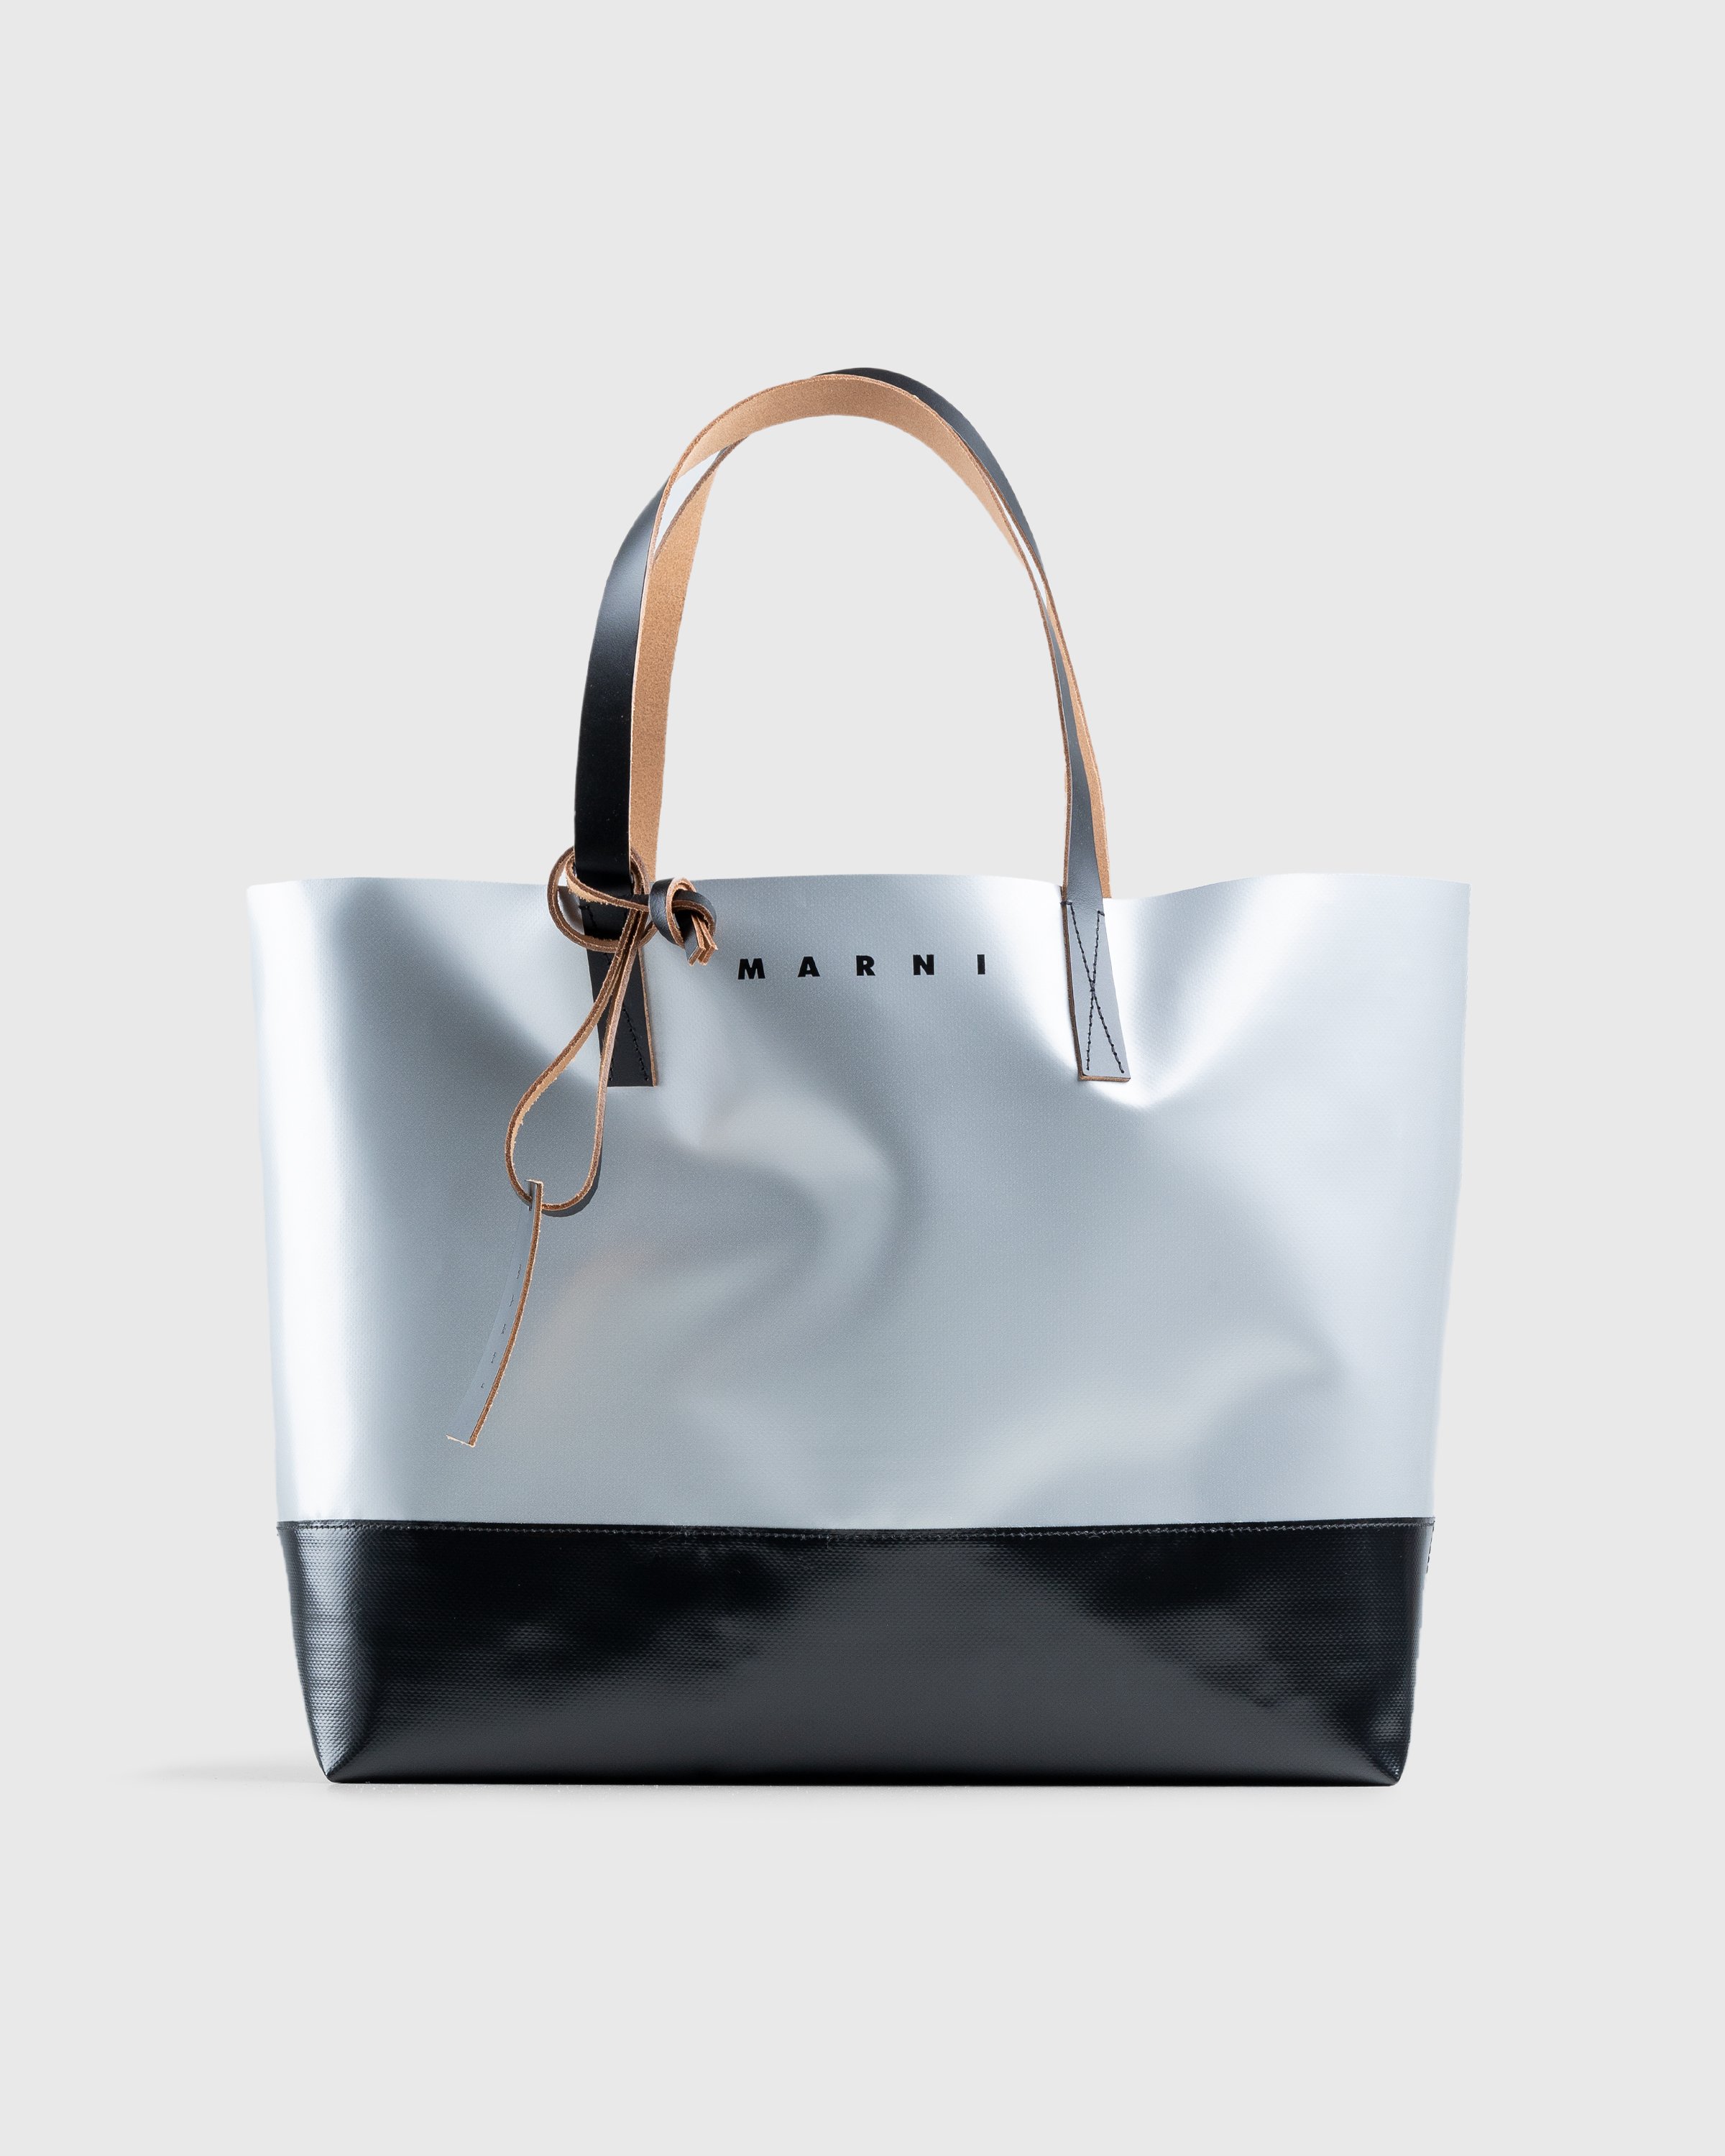 Marni - Tribeca Two-Tone Tote Bag Light Grey - Accessories - Multi - Image 1